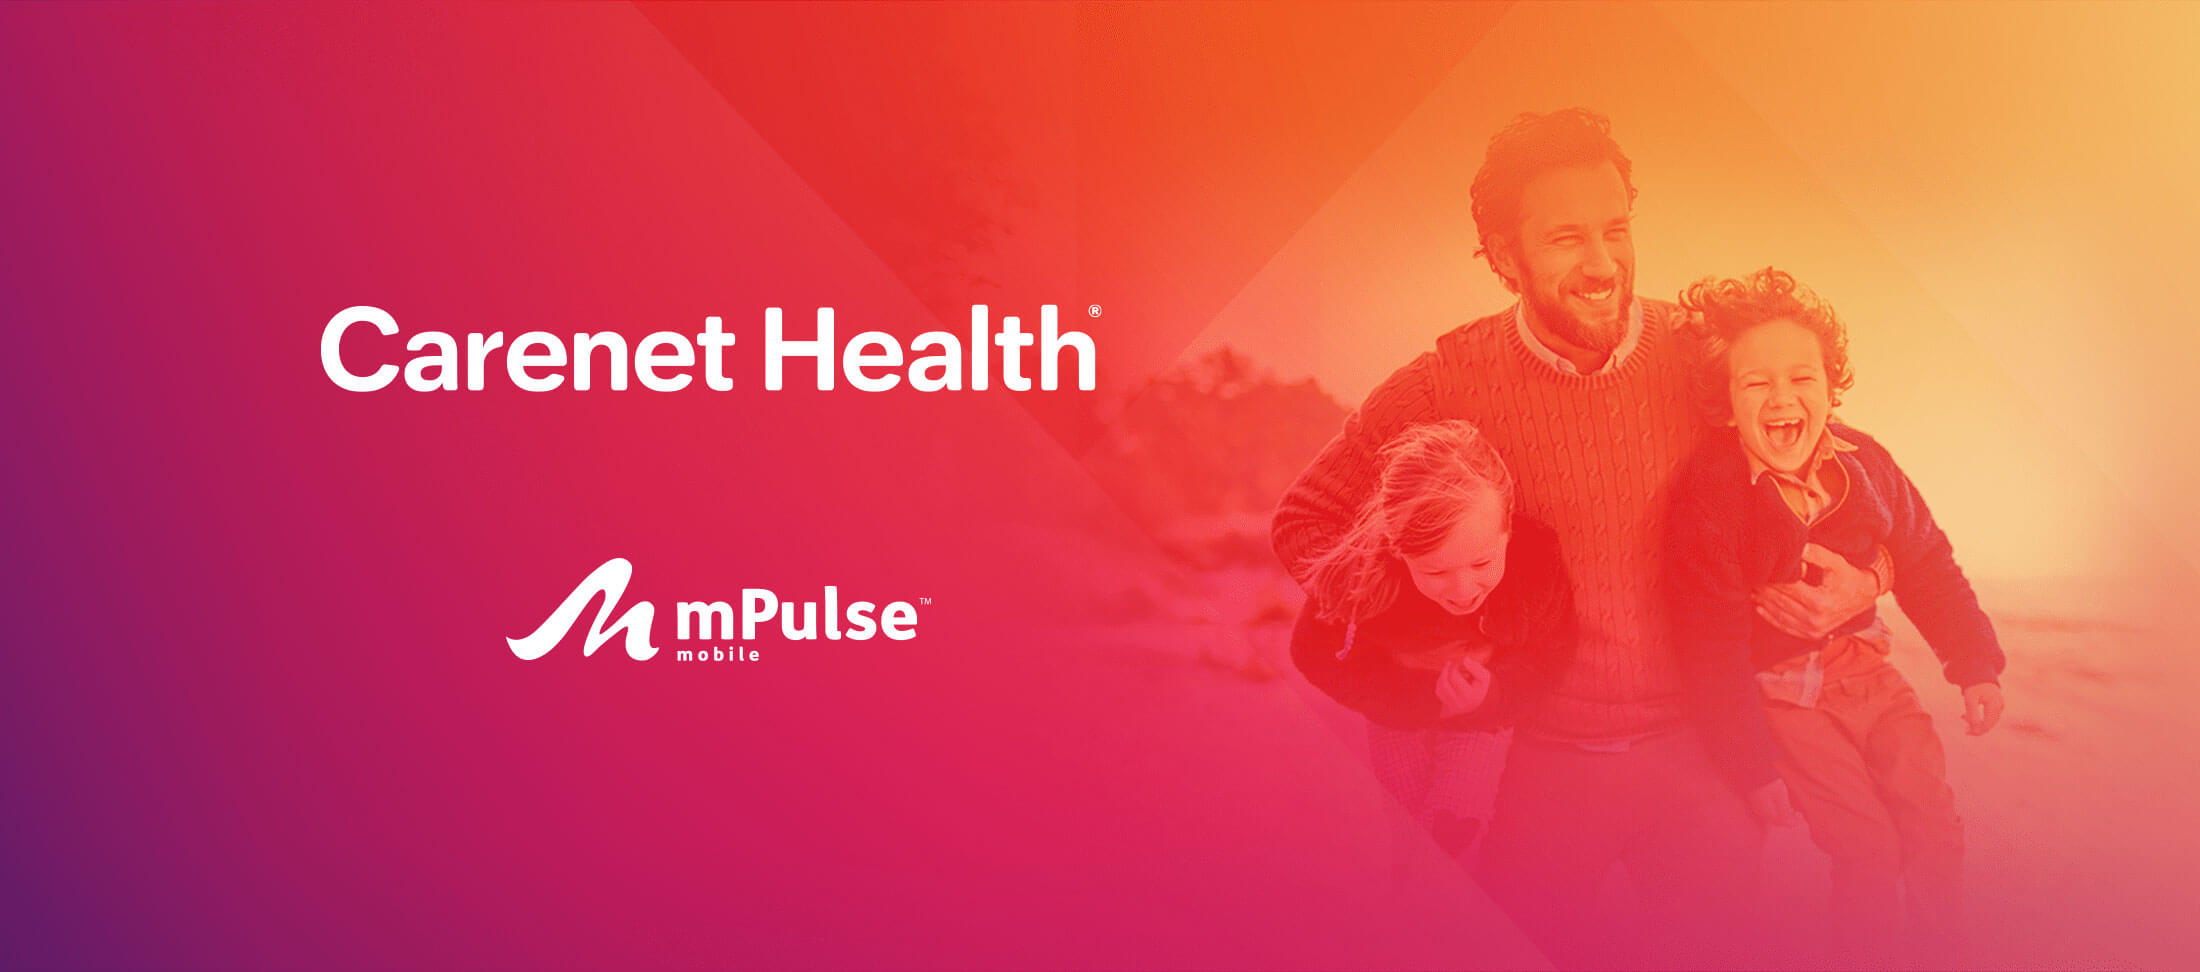 mPulse Mobile and Carenet Health establish strategic partnership to strengthen healthcare consumer engagement